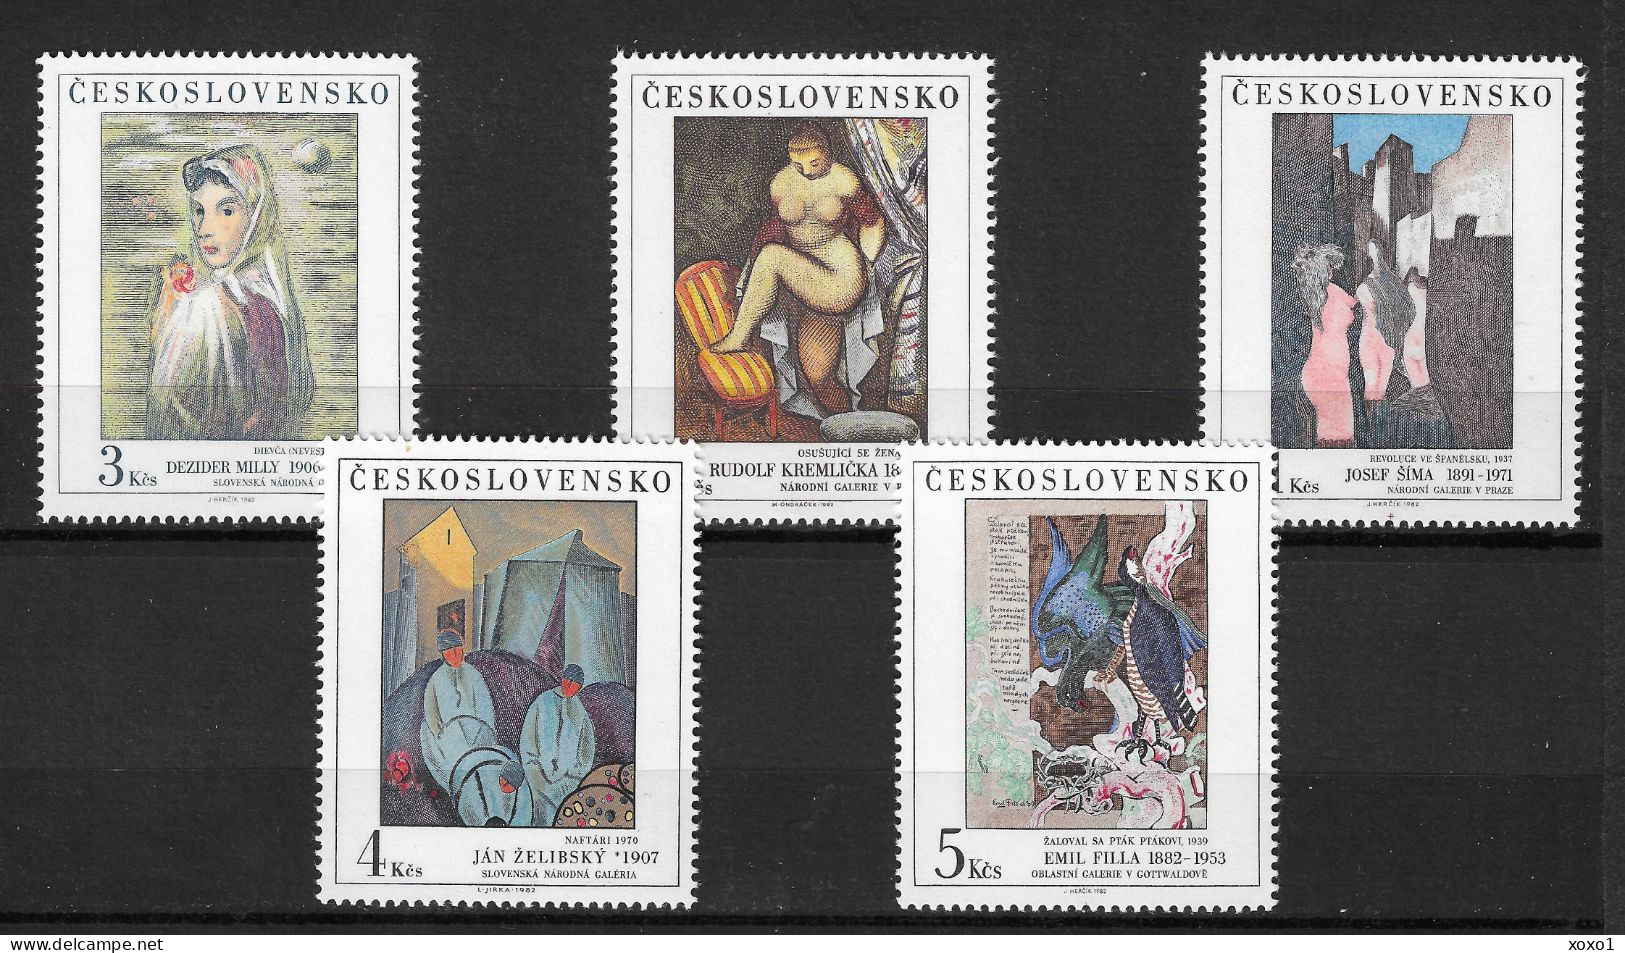 Czechoslovakia 1982 MiNr. 2692 - 2696 National Galleries (XVI) Art, Painting, Modern 5V  MNH**  6.00 € - Moderne